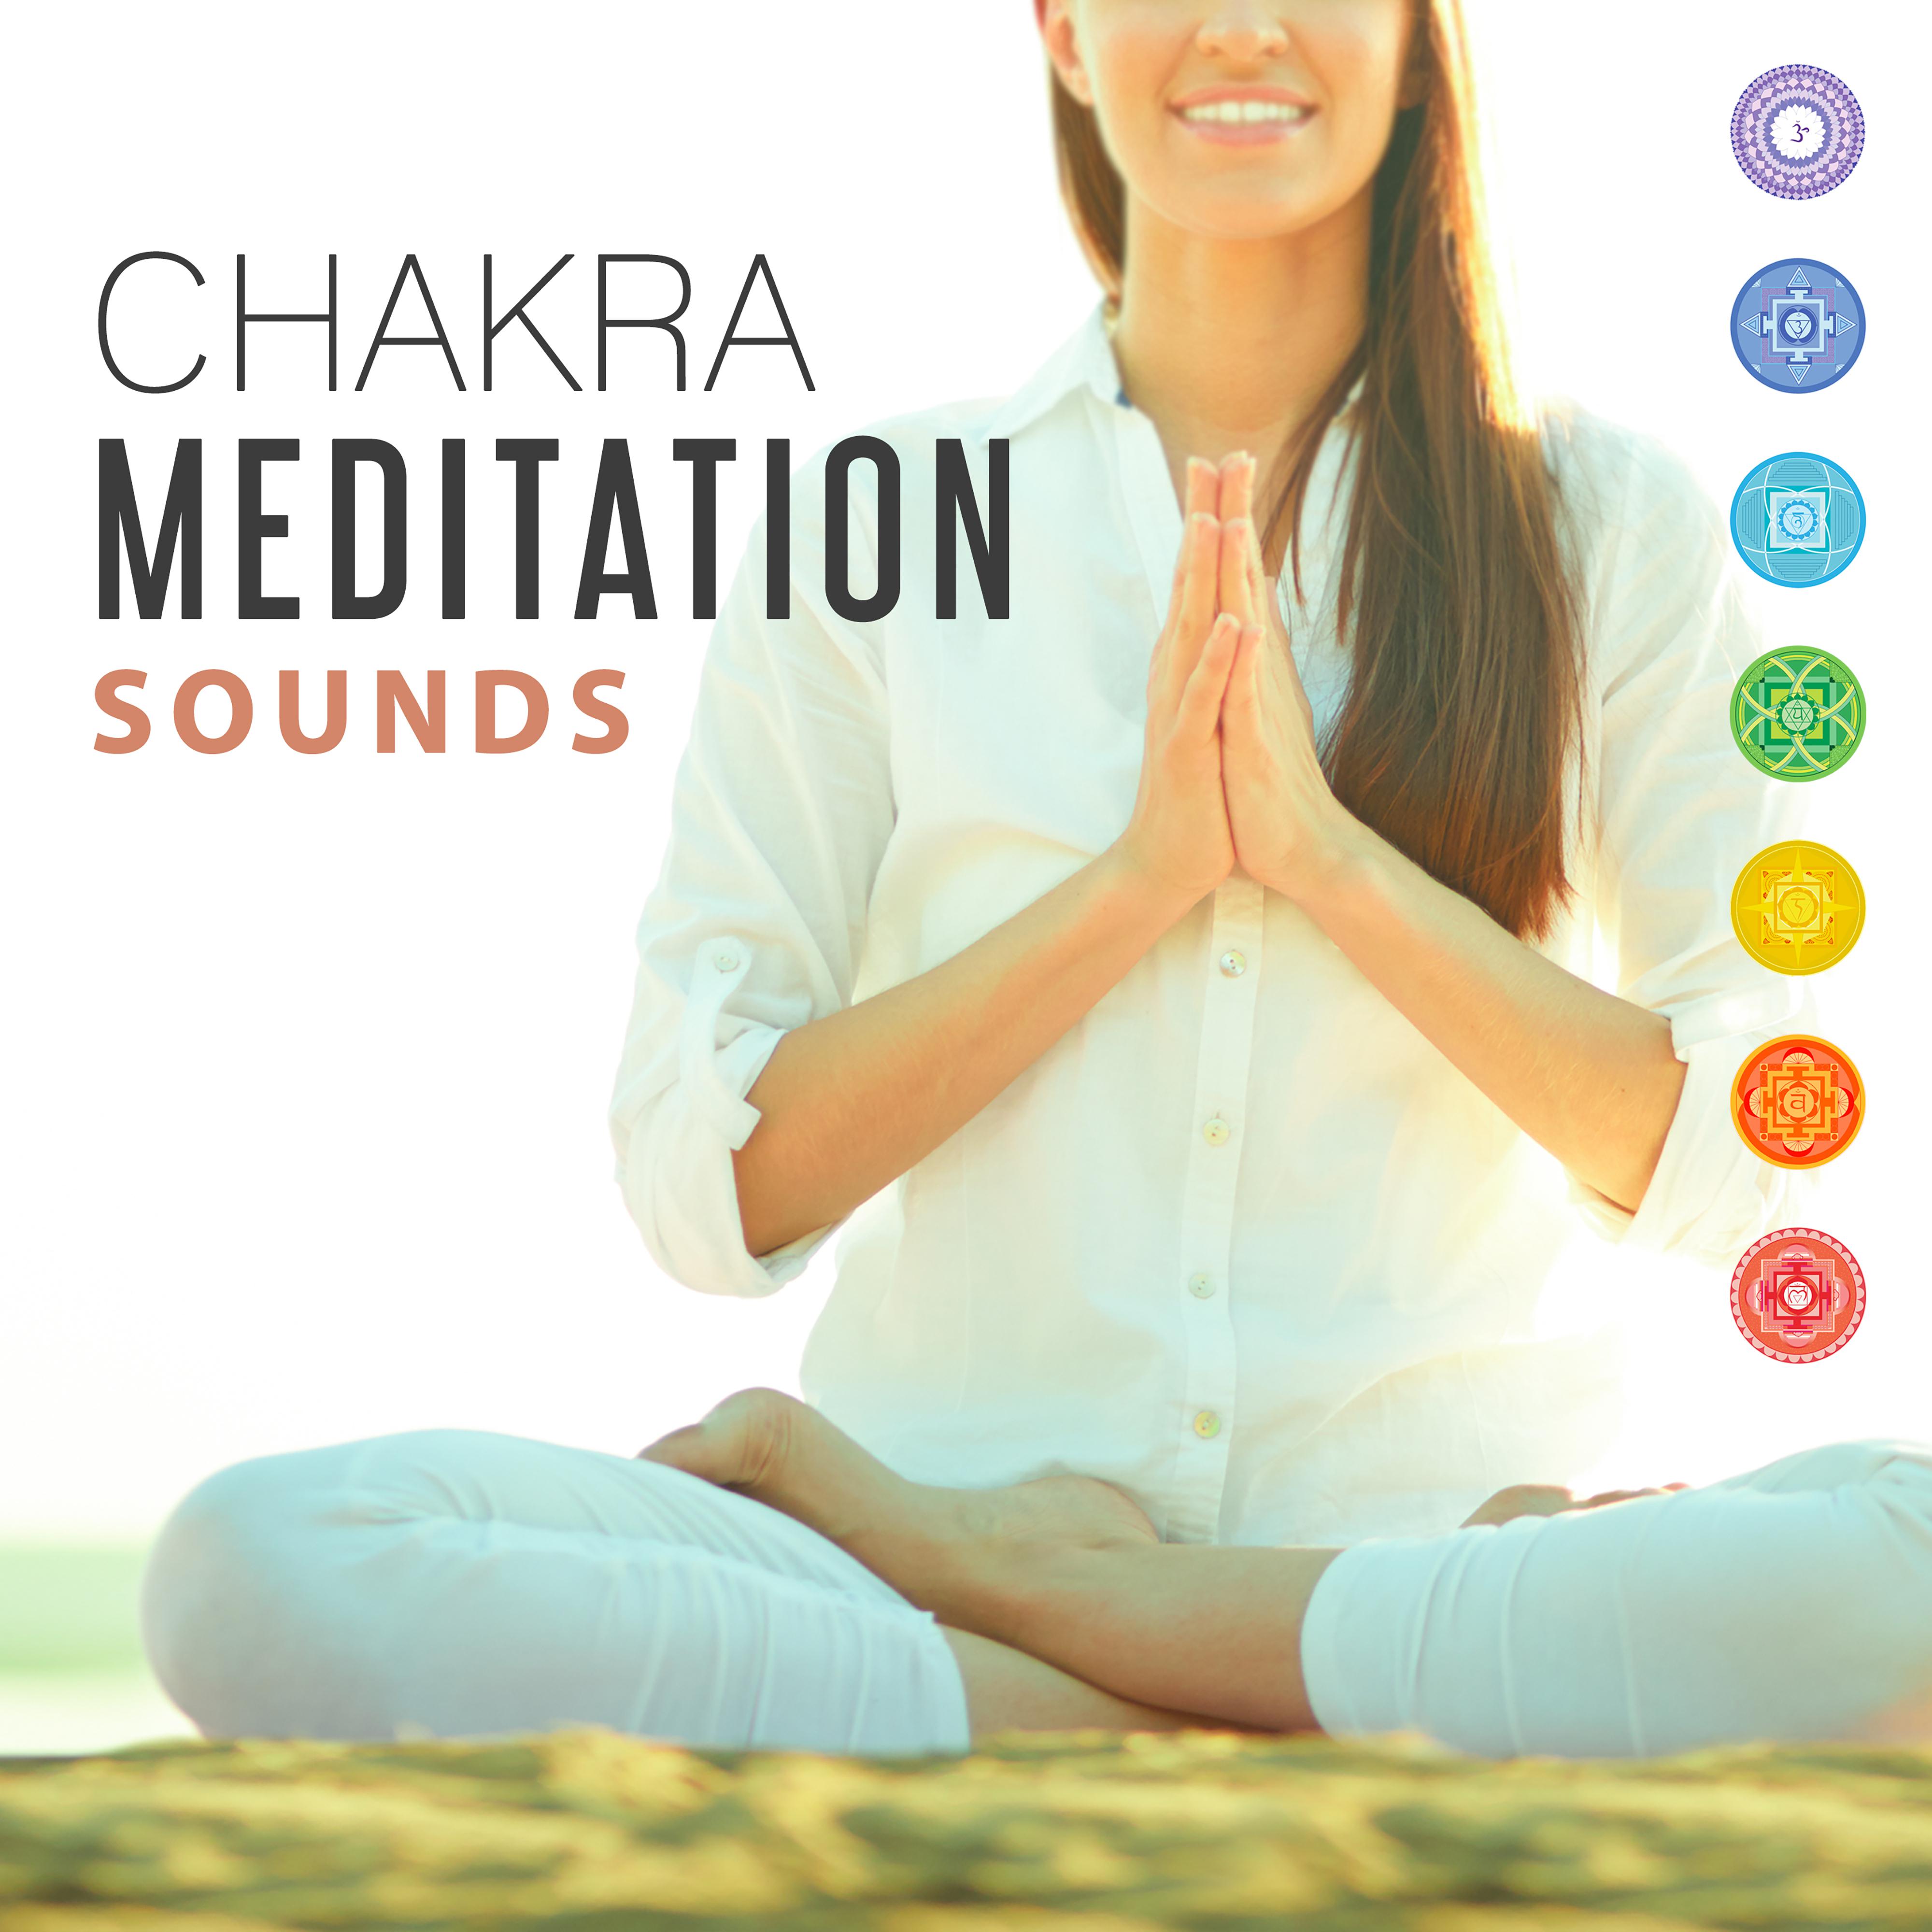 Chakra Meditation Sounds  Soft Sounds to Rest  Relax, Inner Journey, Spirit Free, Mind Peace, Calm Meditate